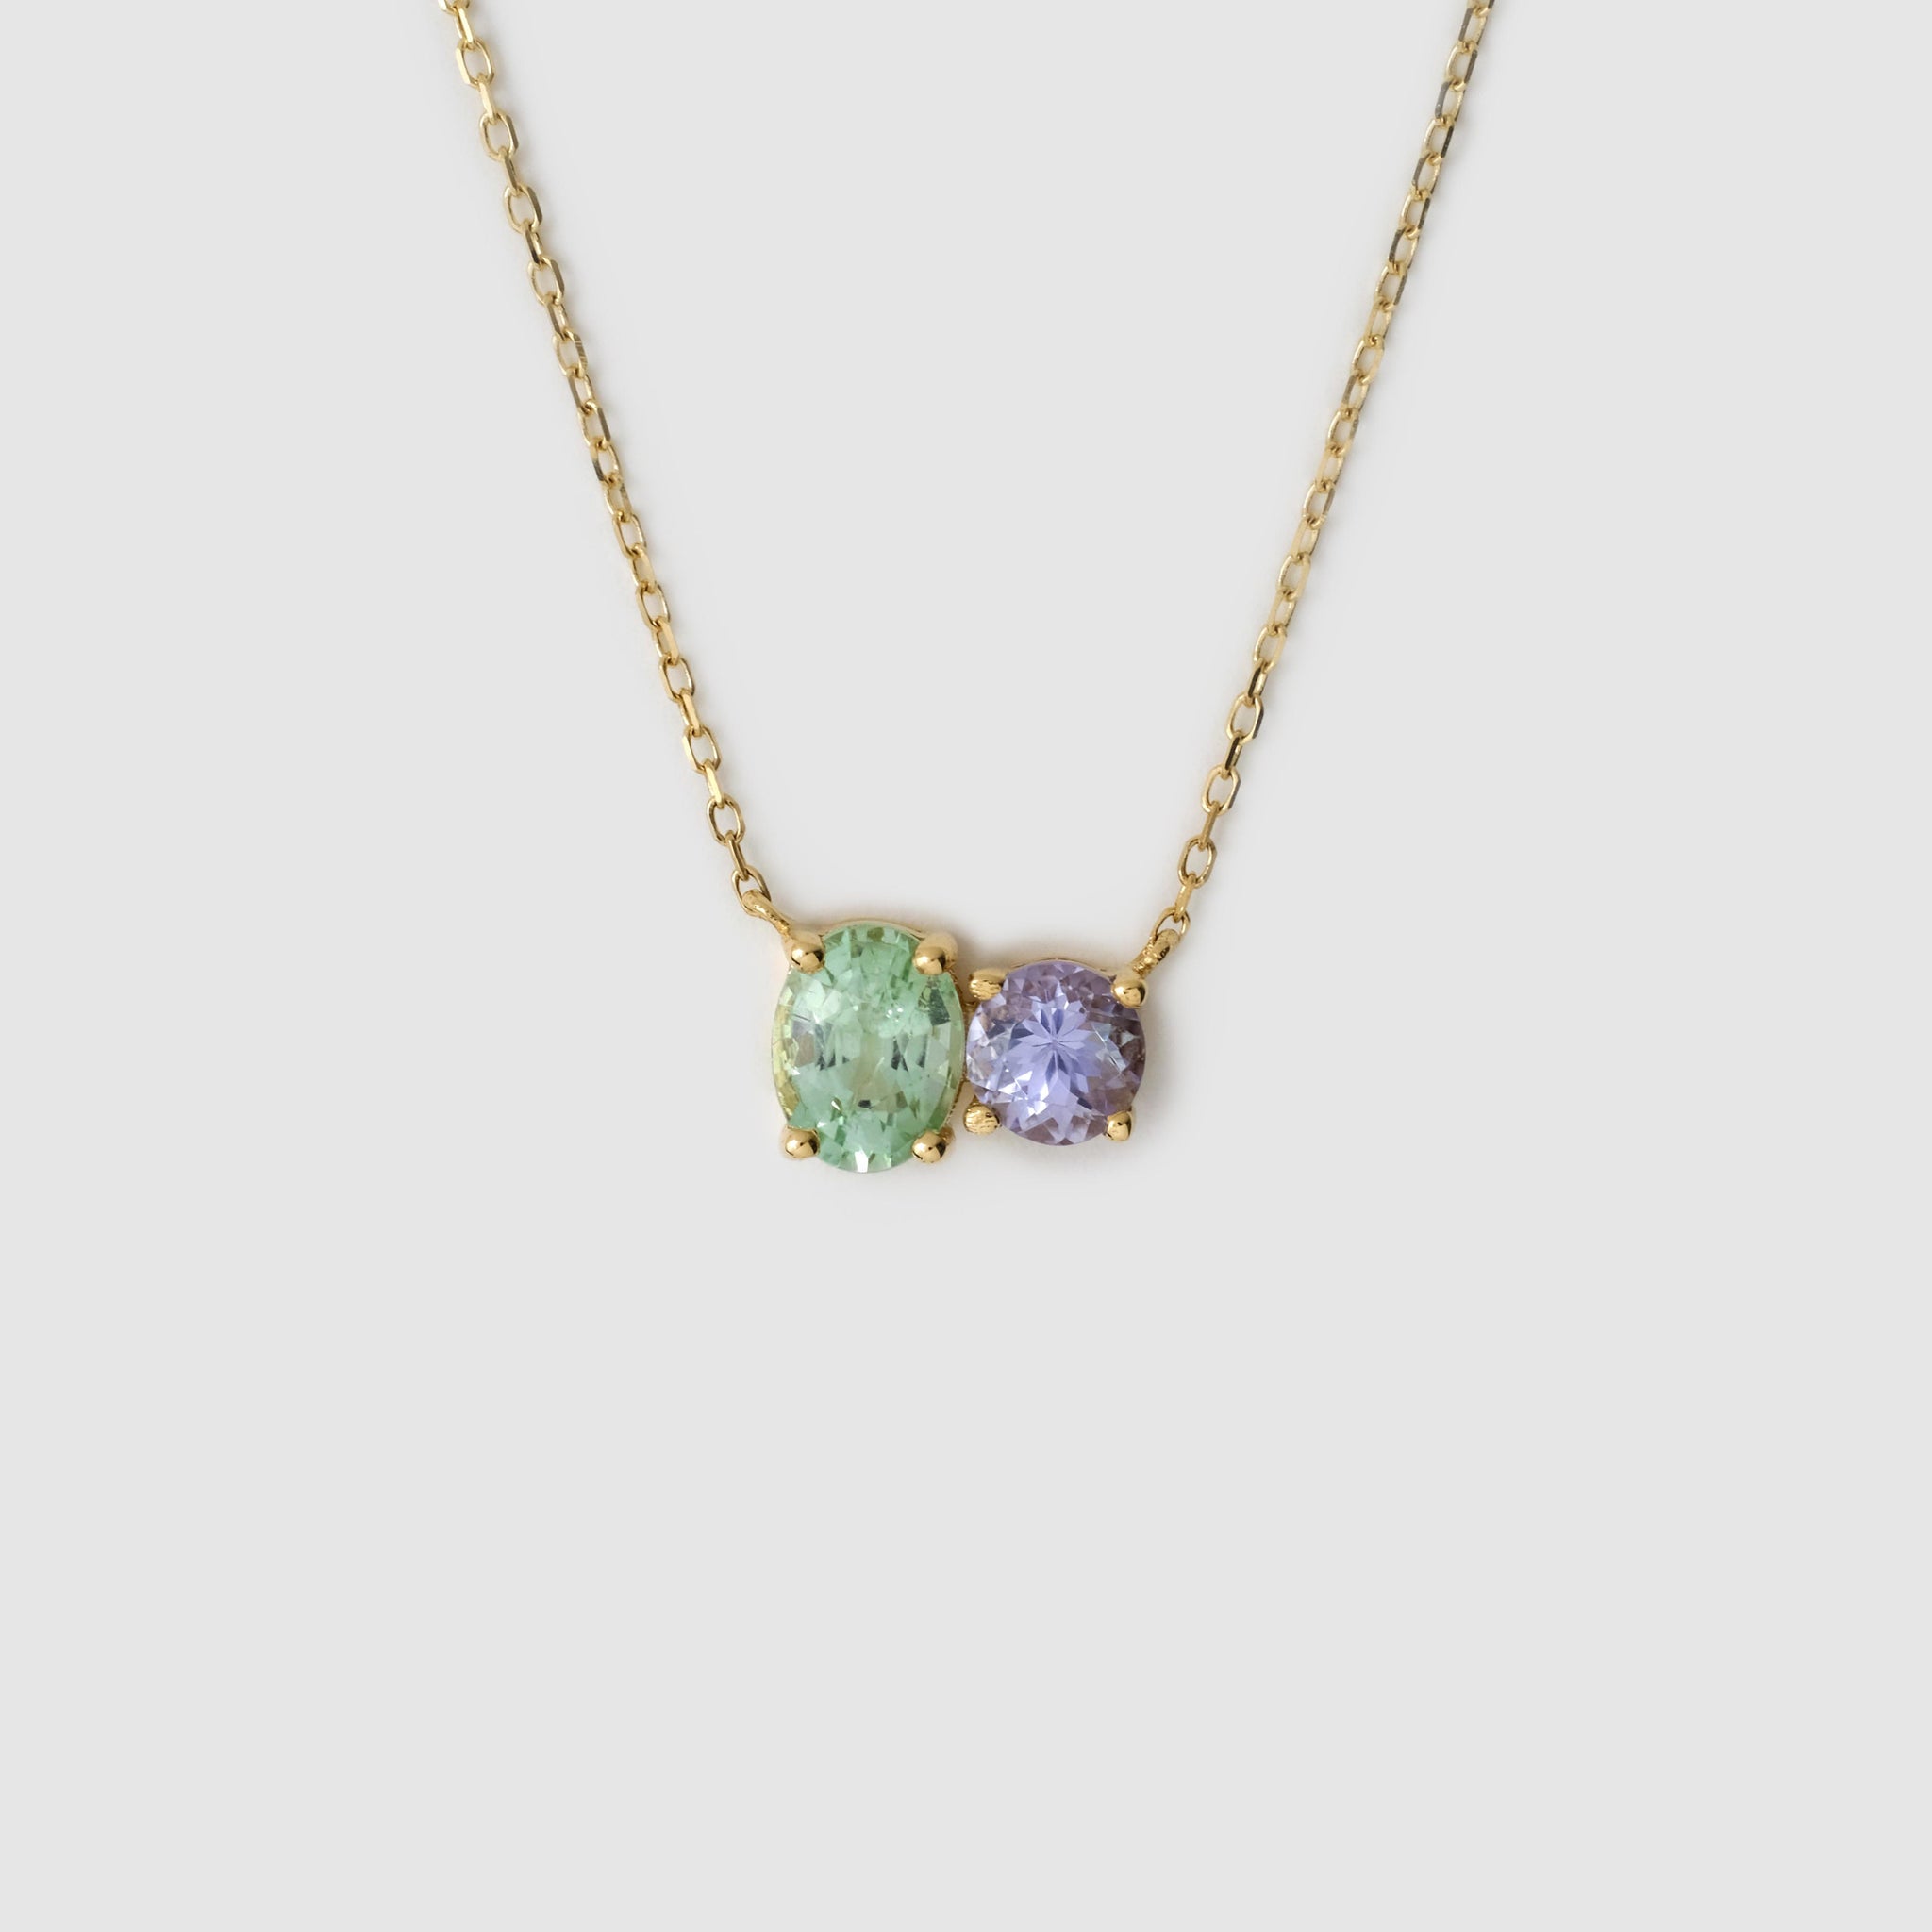 Green Tourmaline & Tanzanite Necklace, 18k solid gold